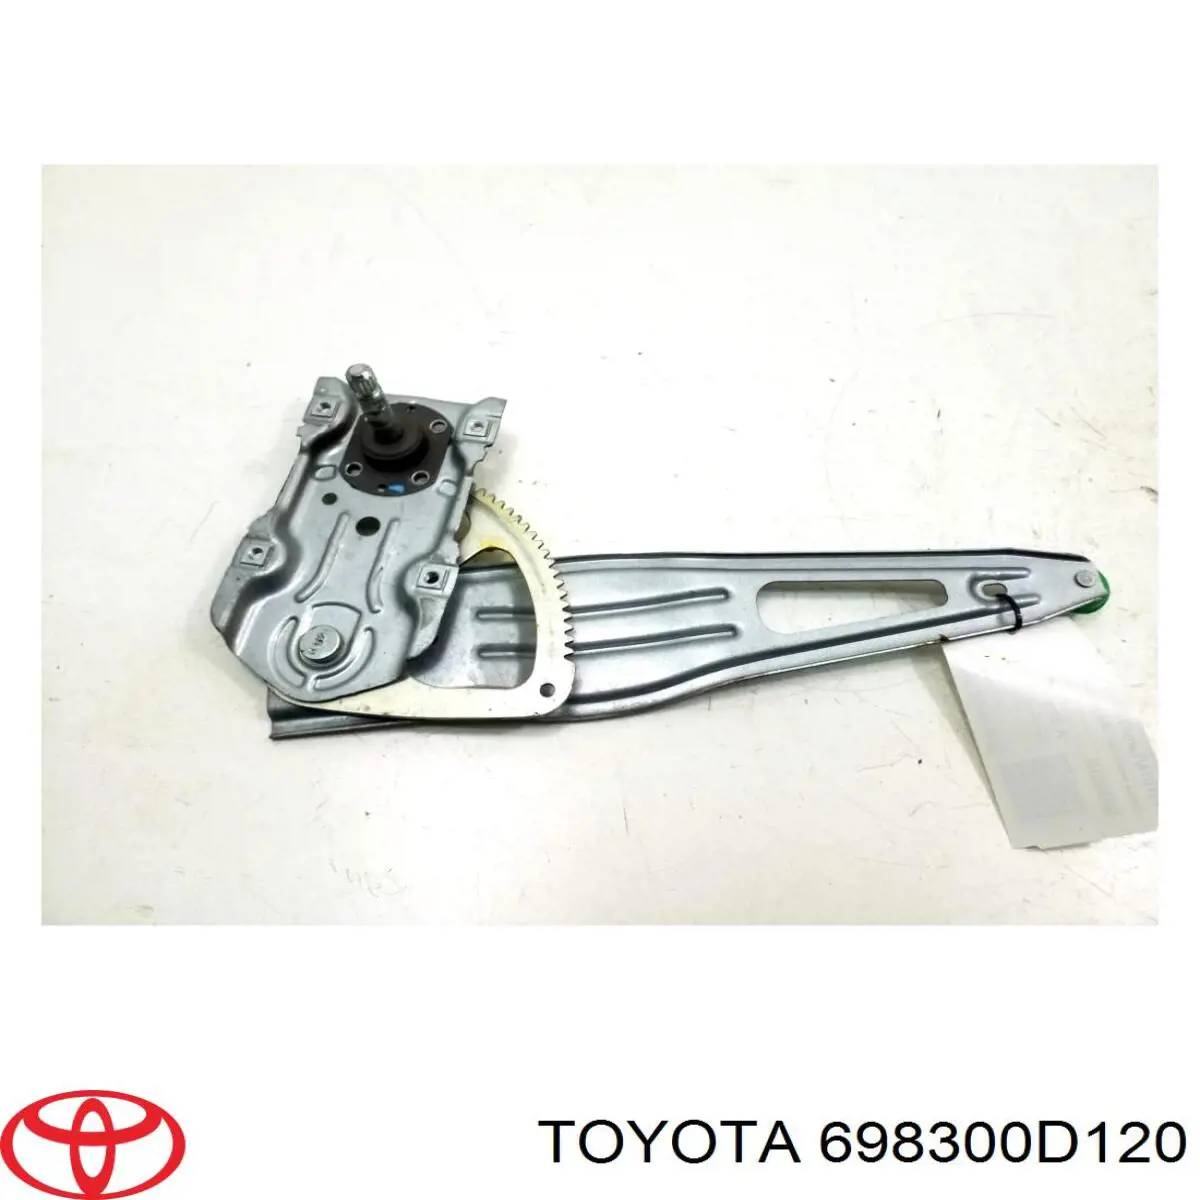 Mecanismo alzacristales, puerta trasera derecha para Toyota Yaris 